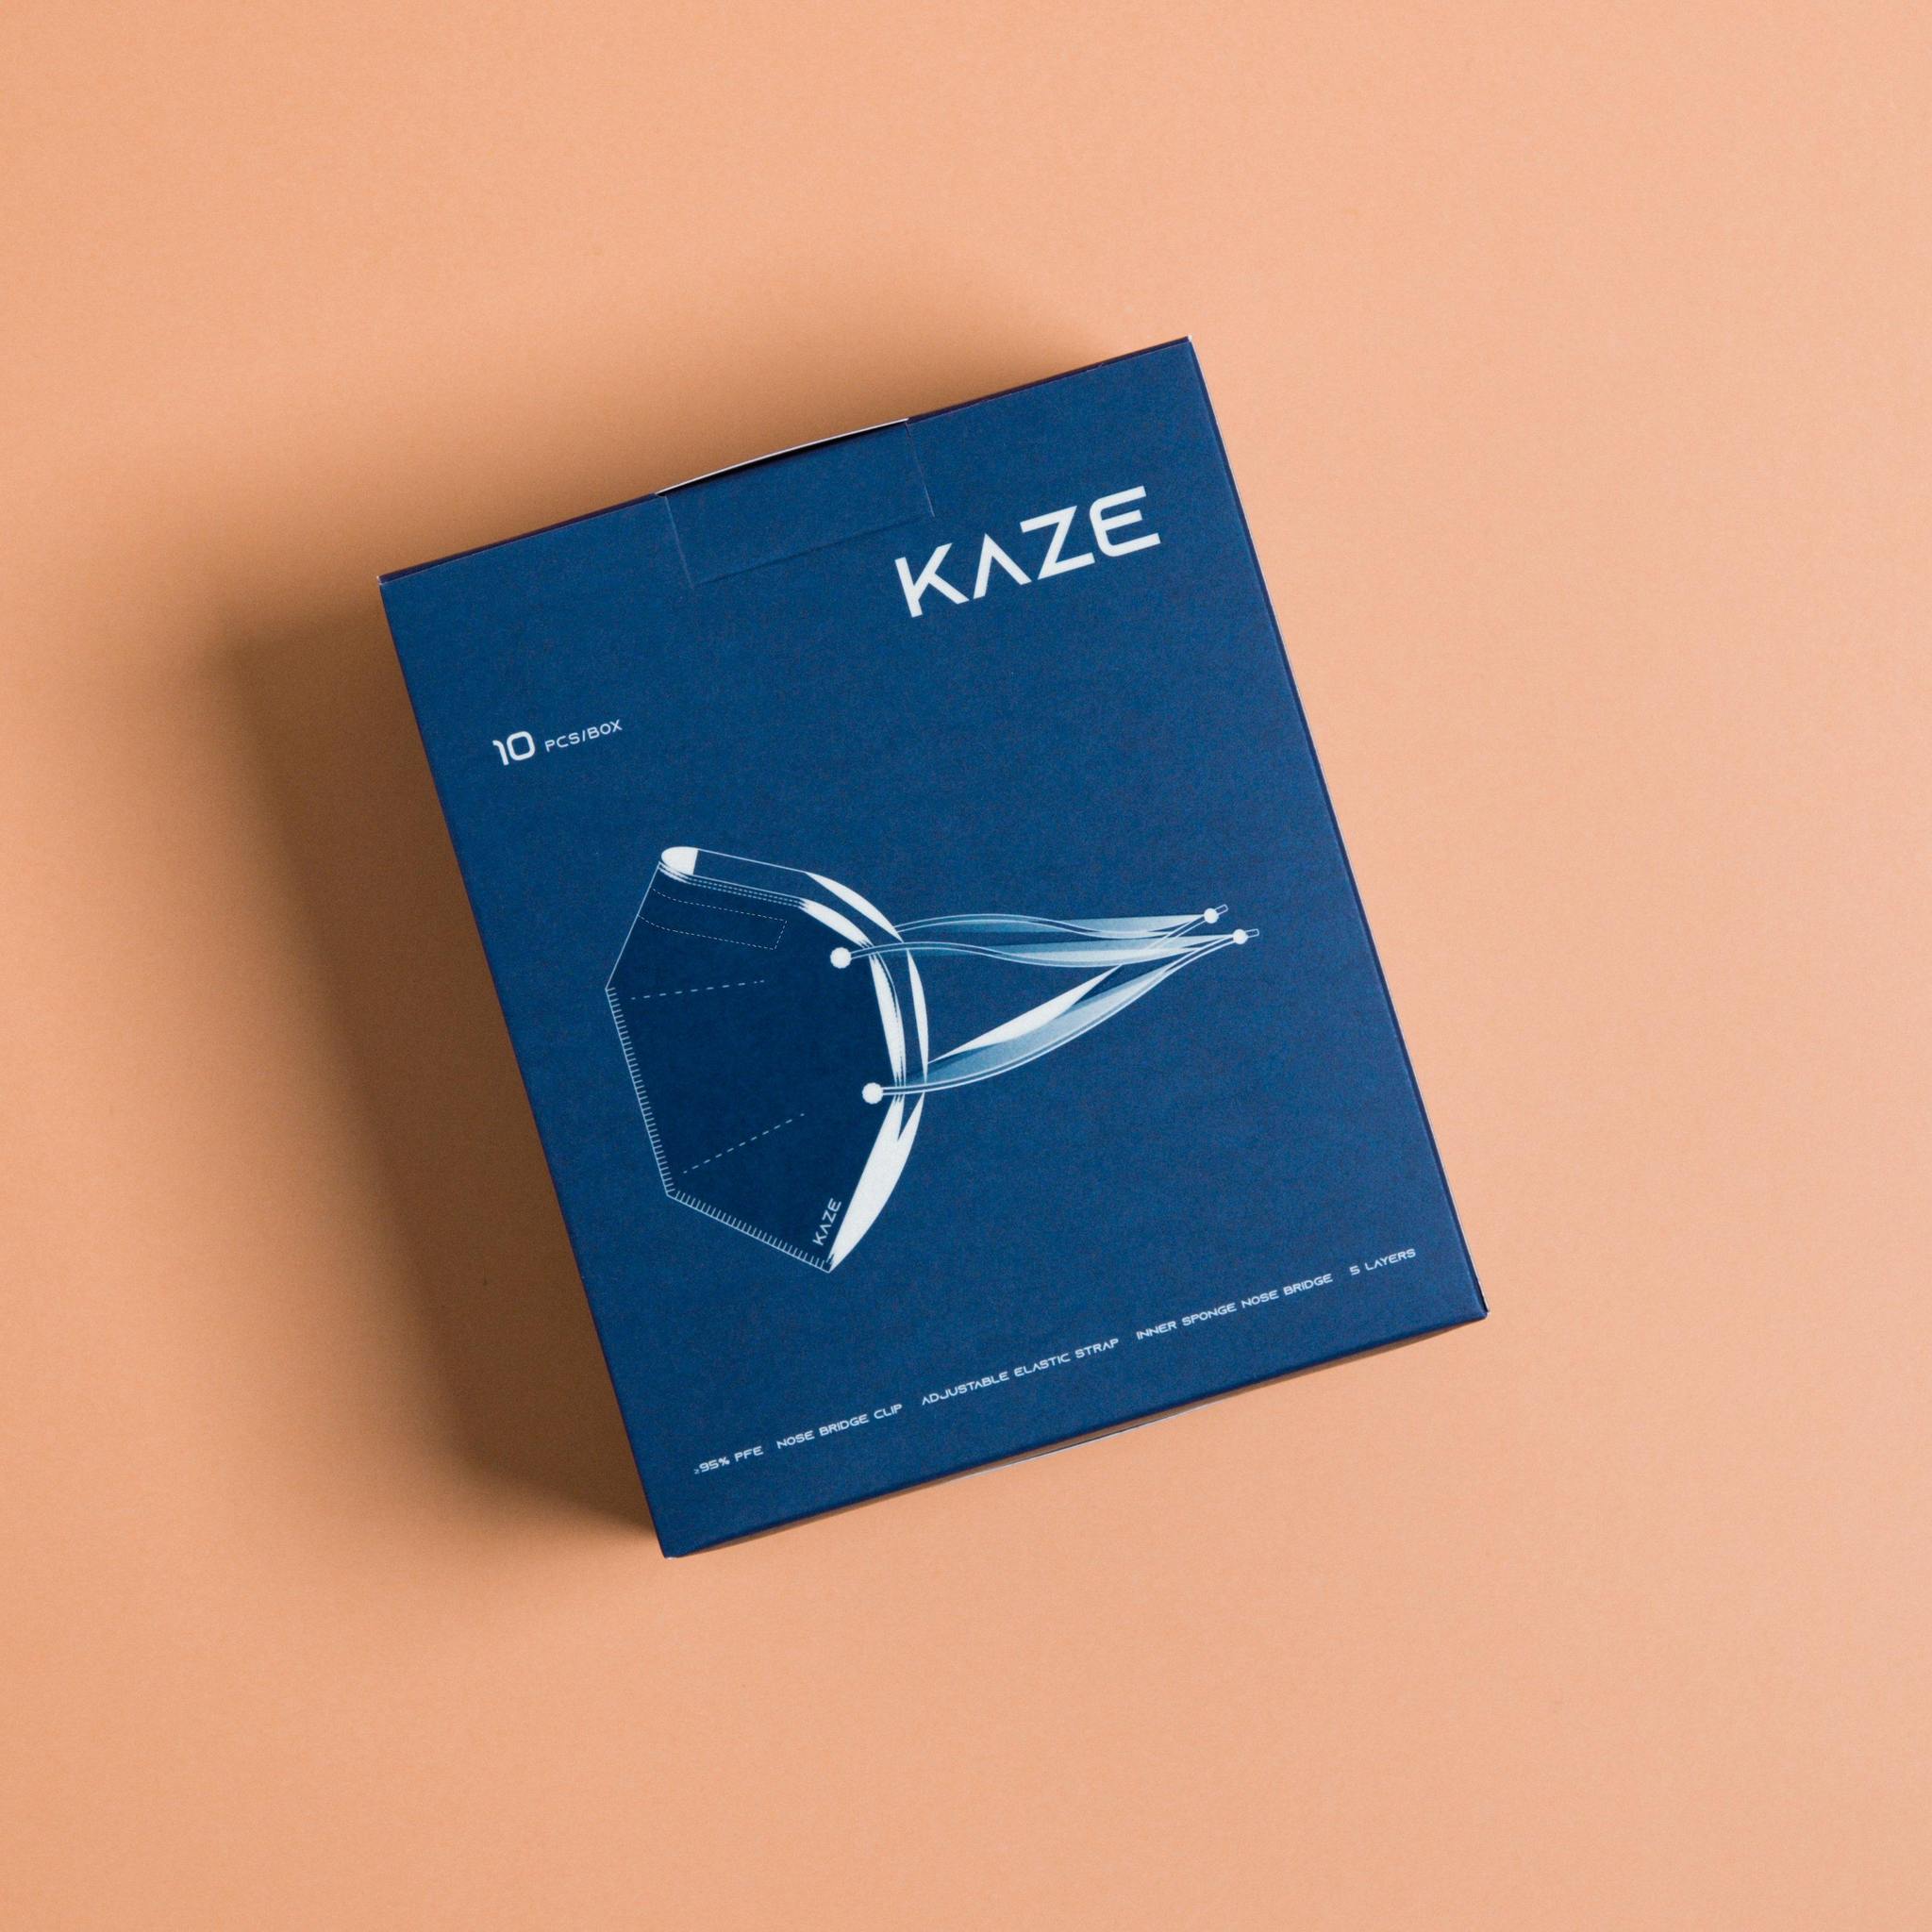 KAZE Masks - Individual Series - Royal Blue